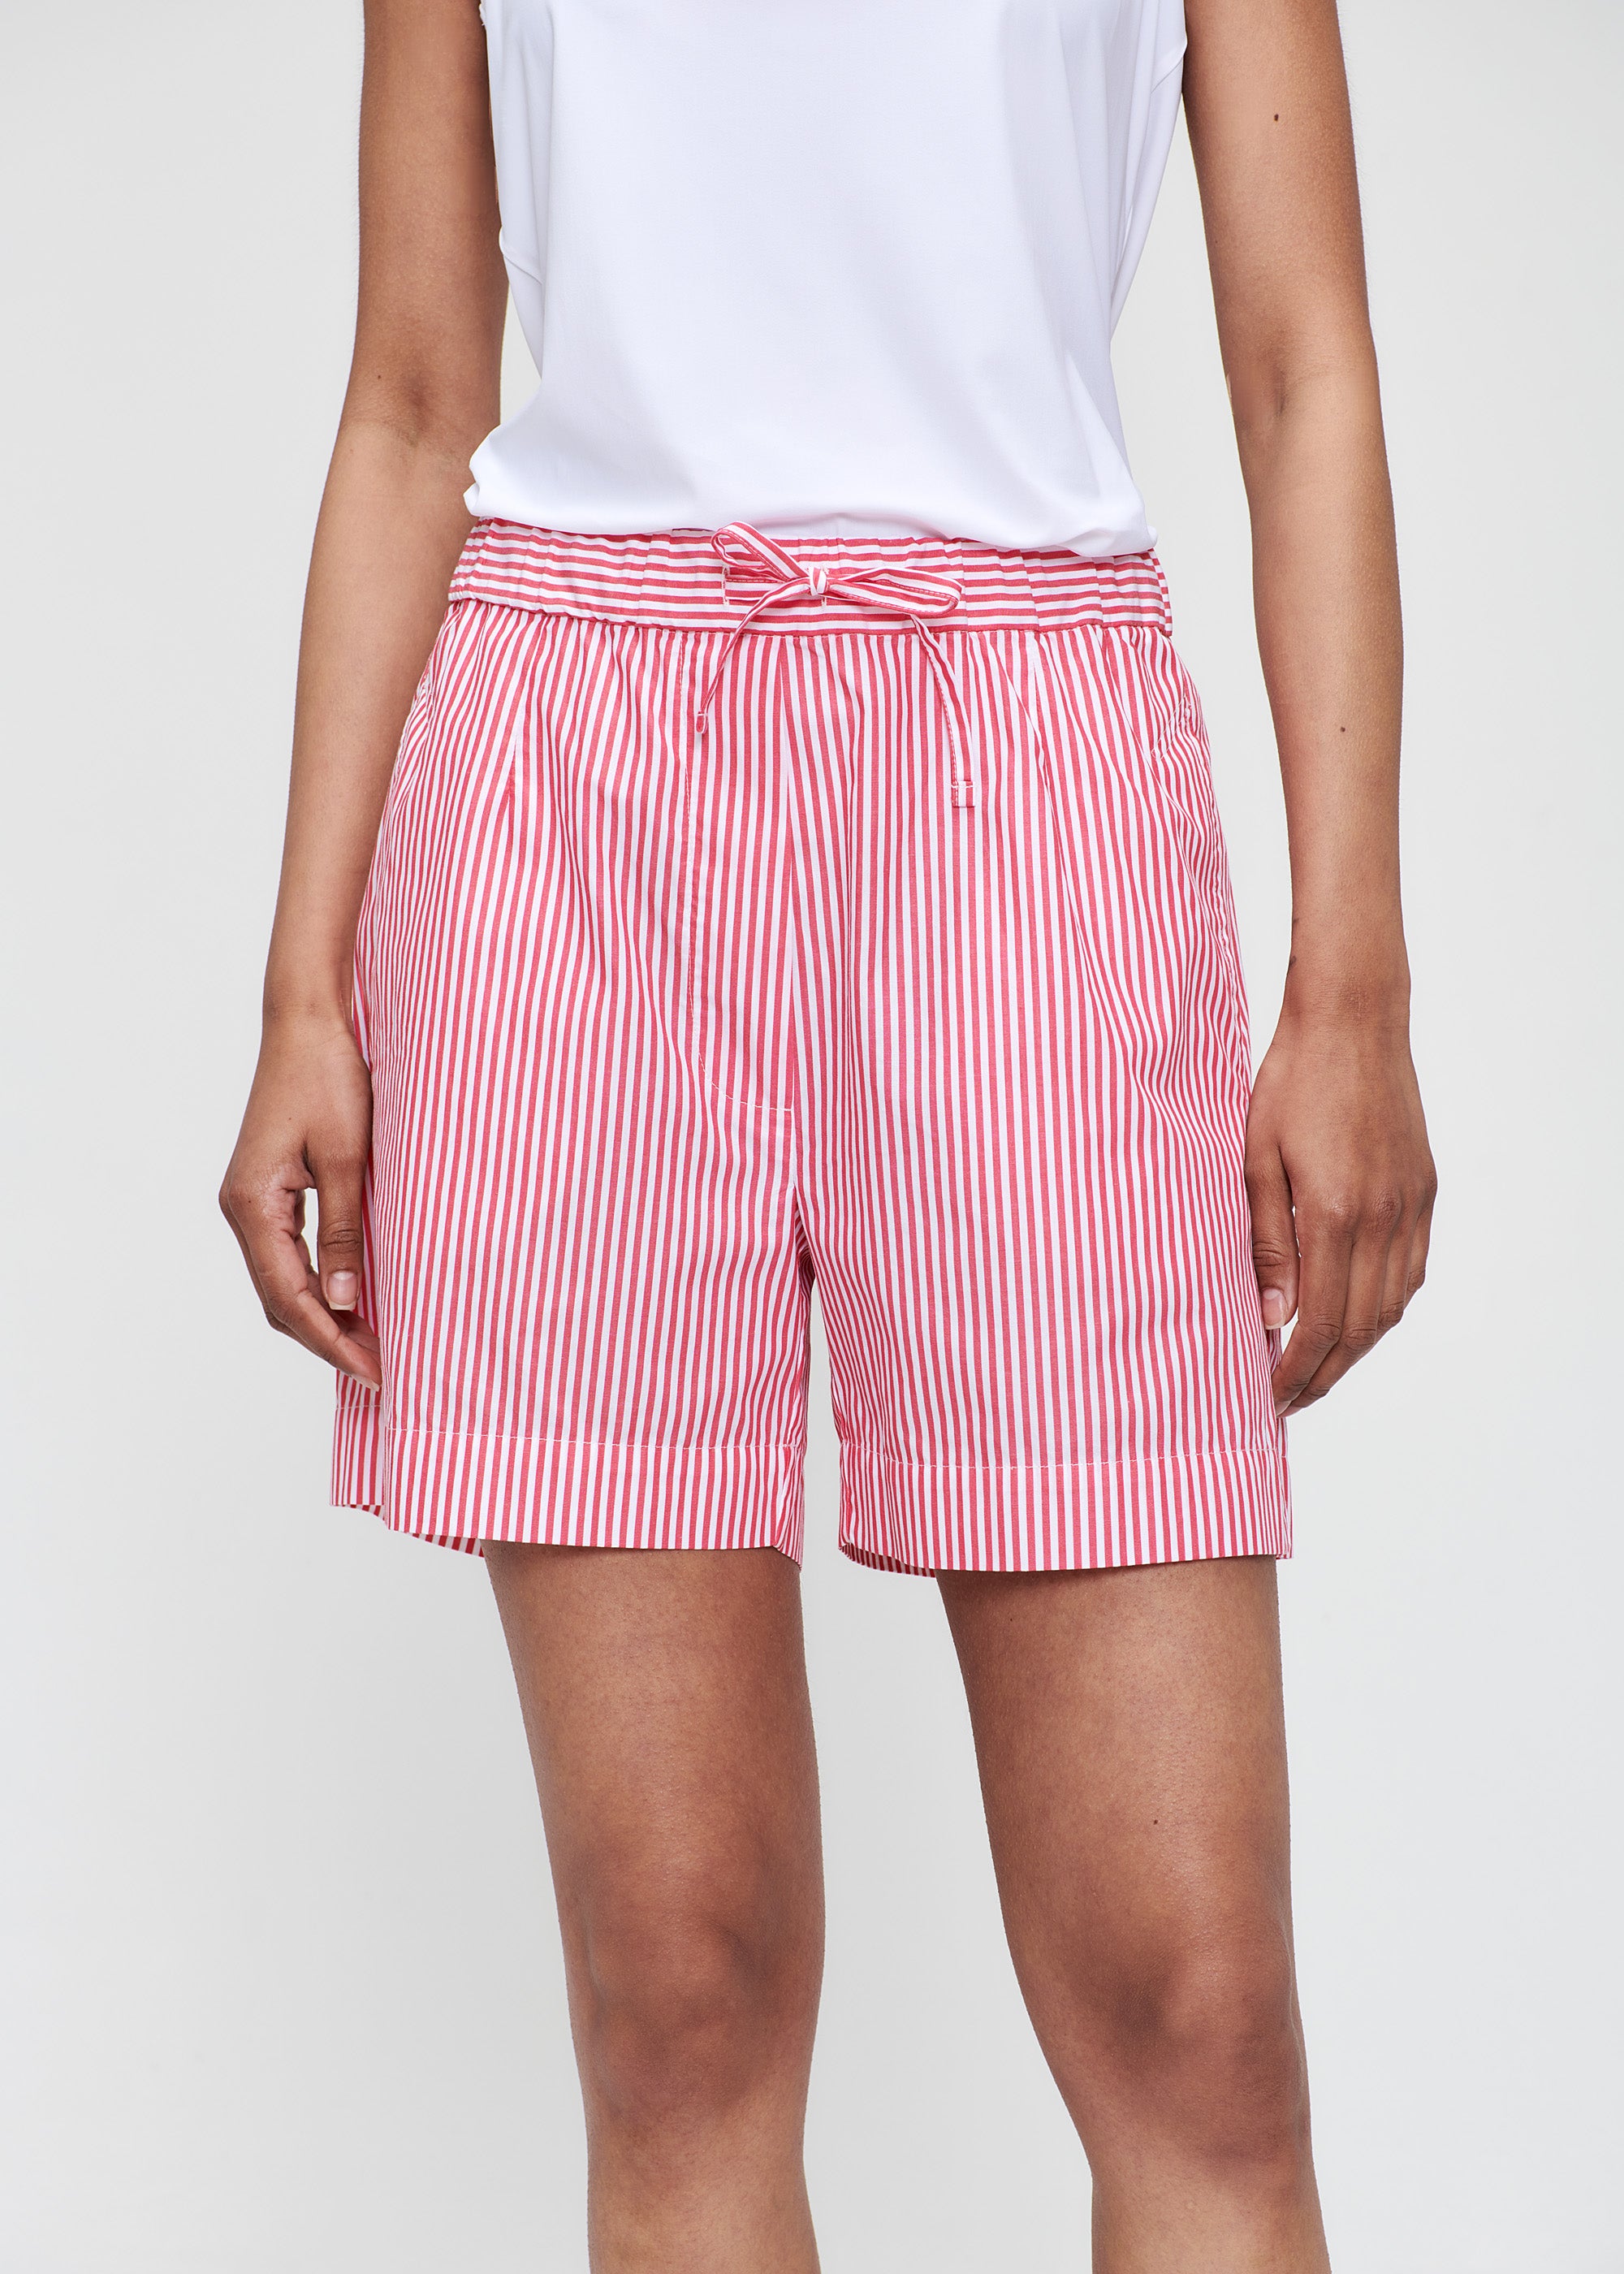 littlebig] 19ss Stripe Short Trousers 2-